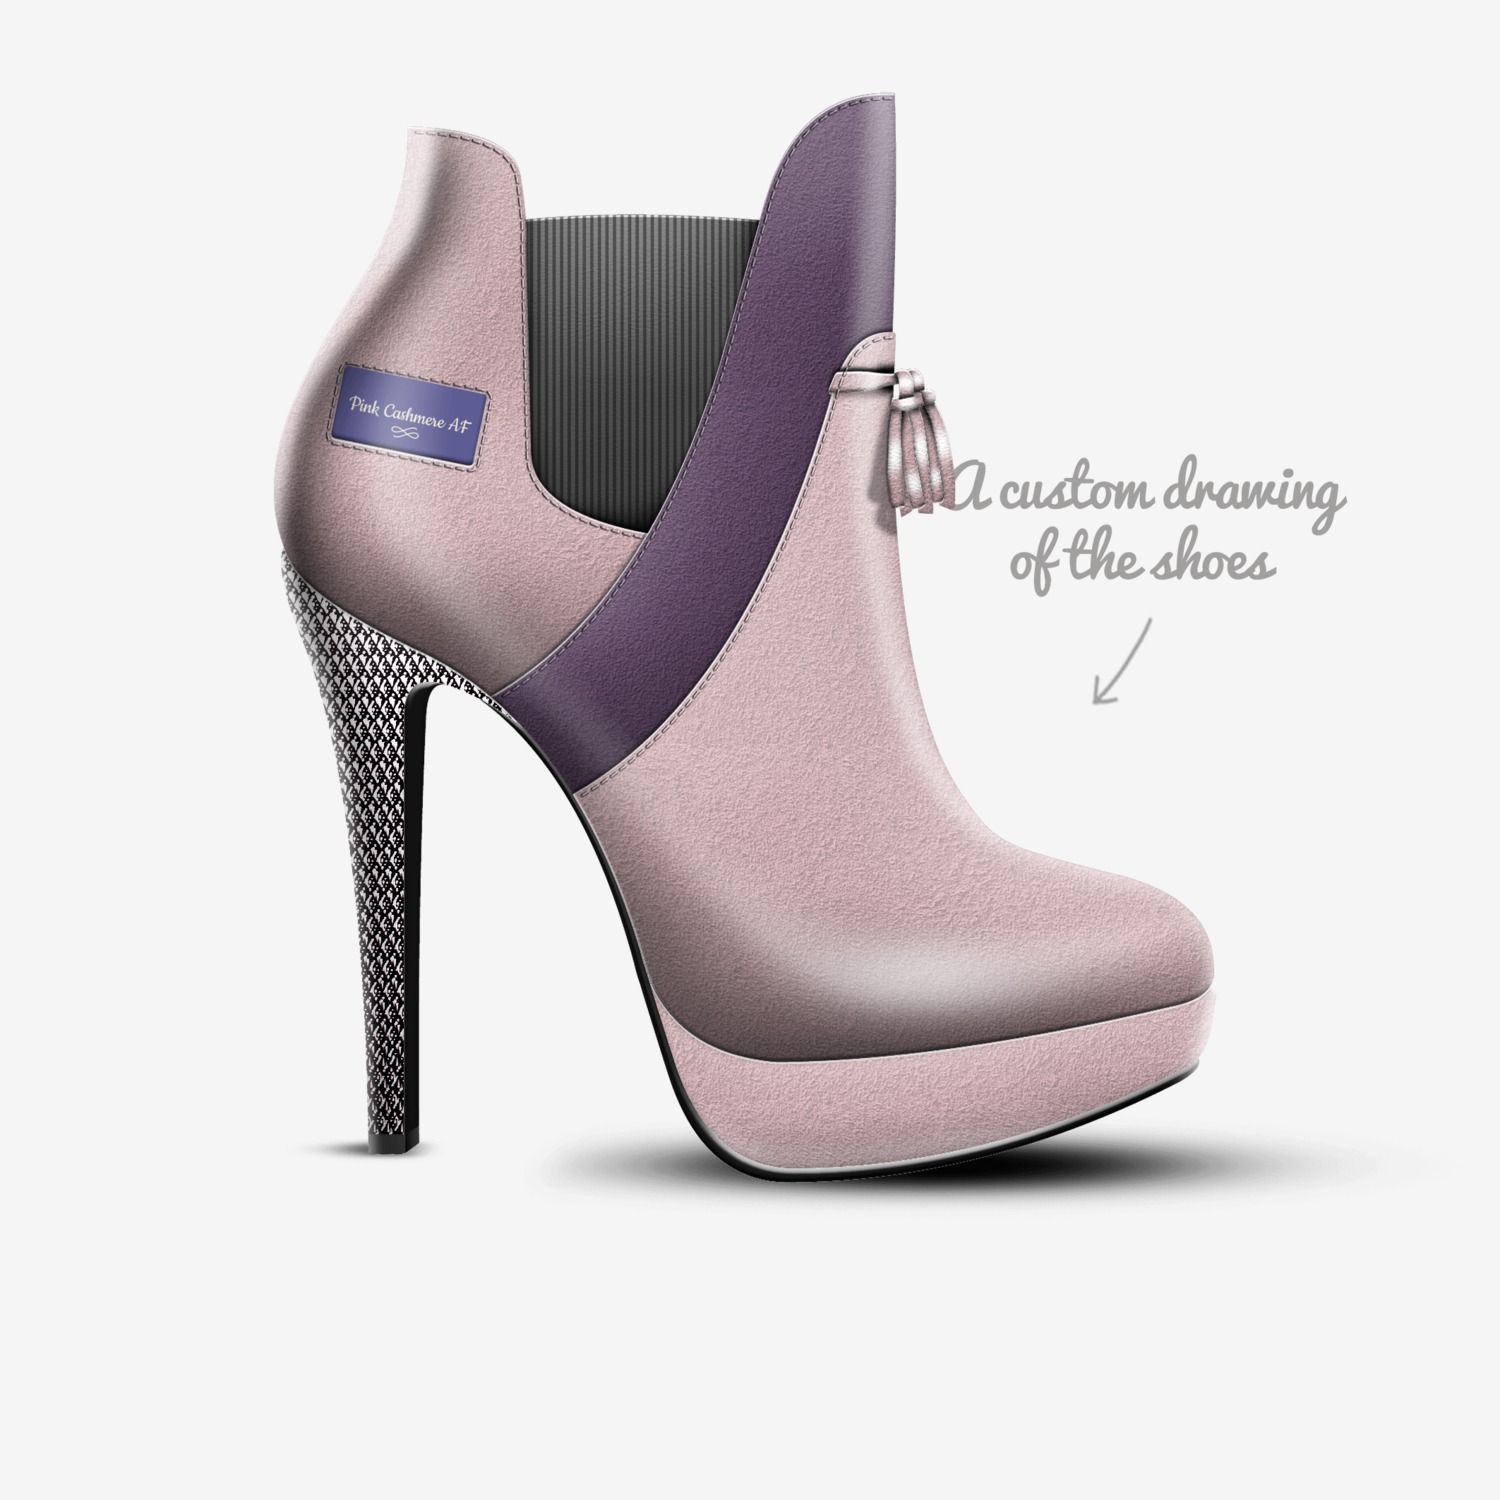 Pink Cashmere AF Anna | by Custom A Fantastic concept Shoe